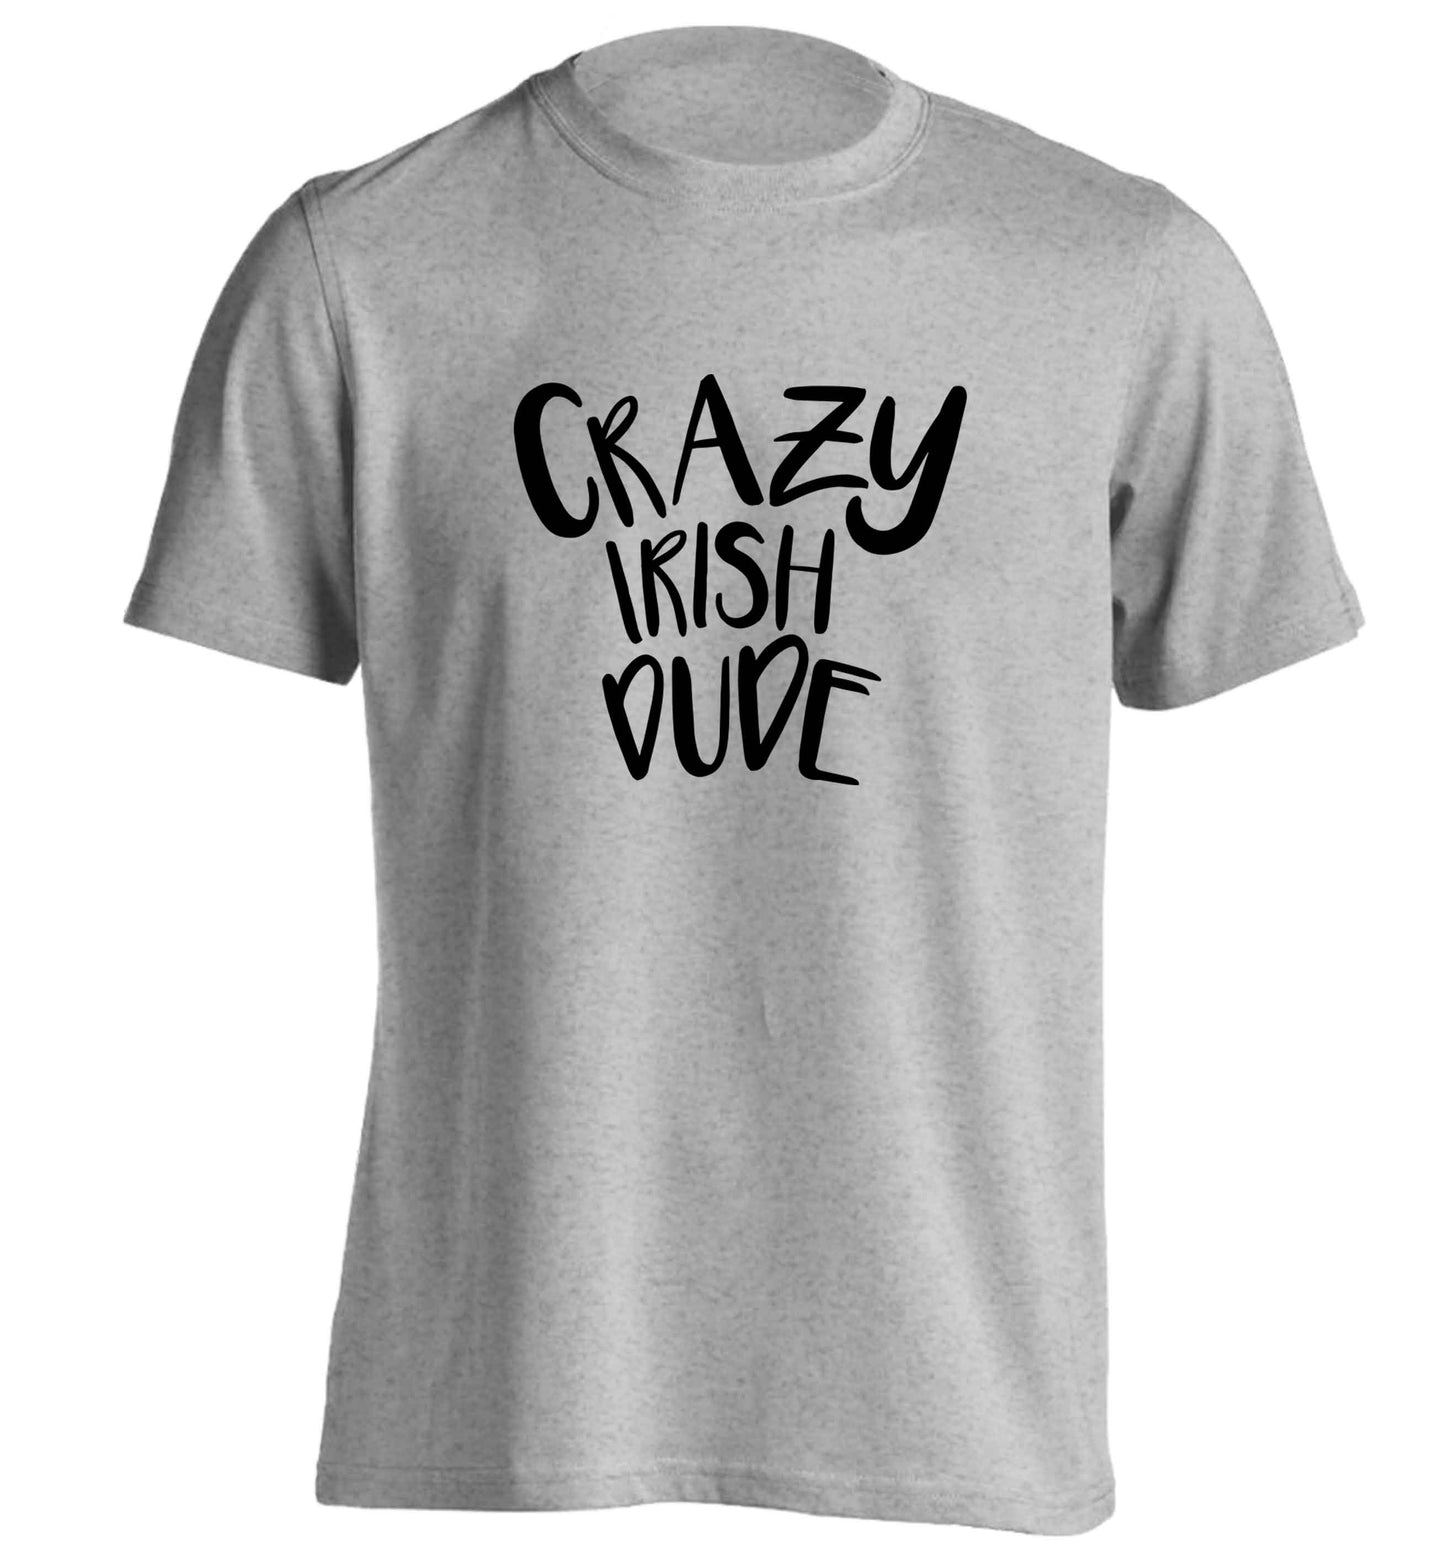 Crazy Irish dude adults unisex grey Tshirt 2XL